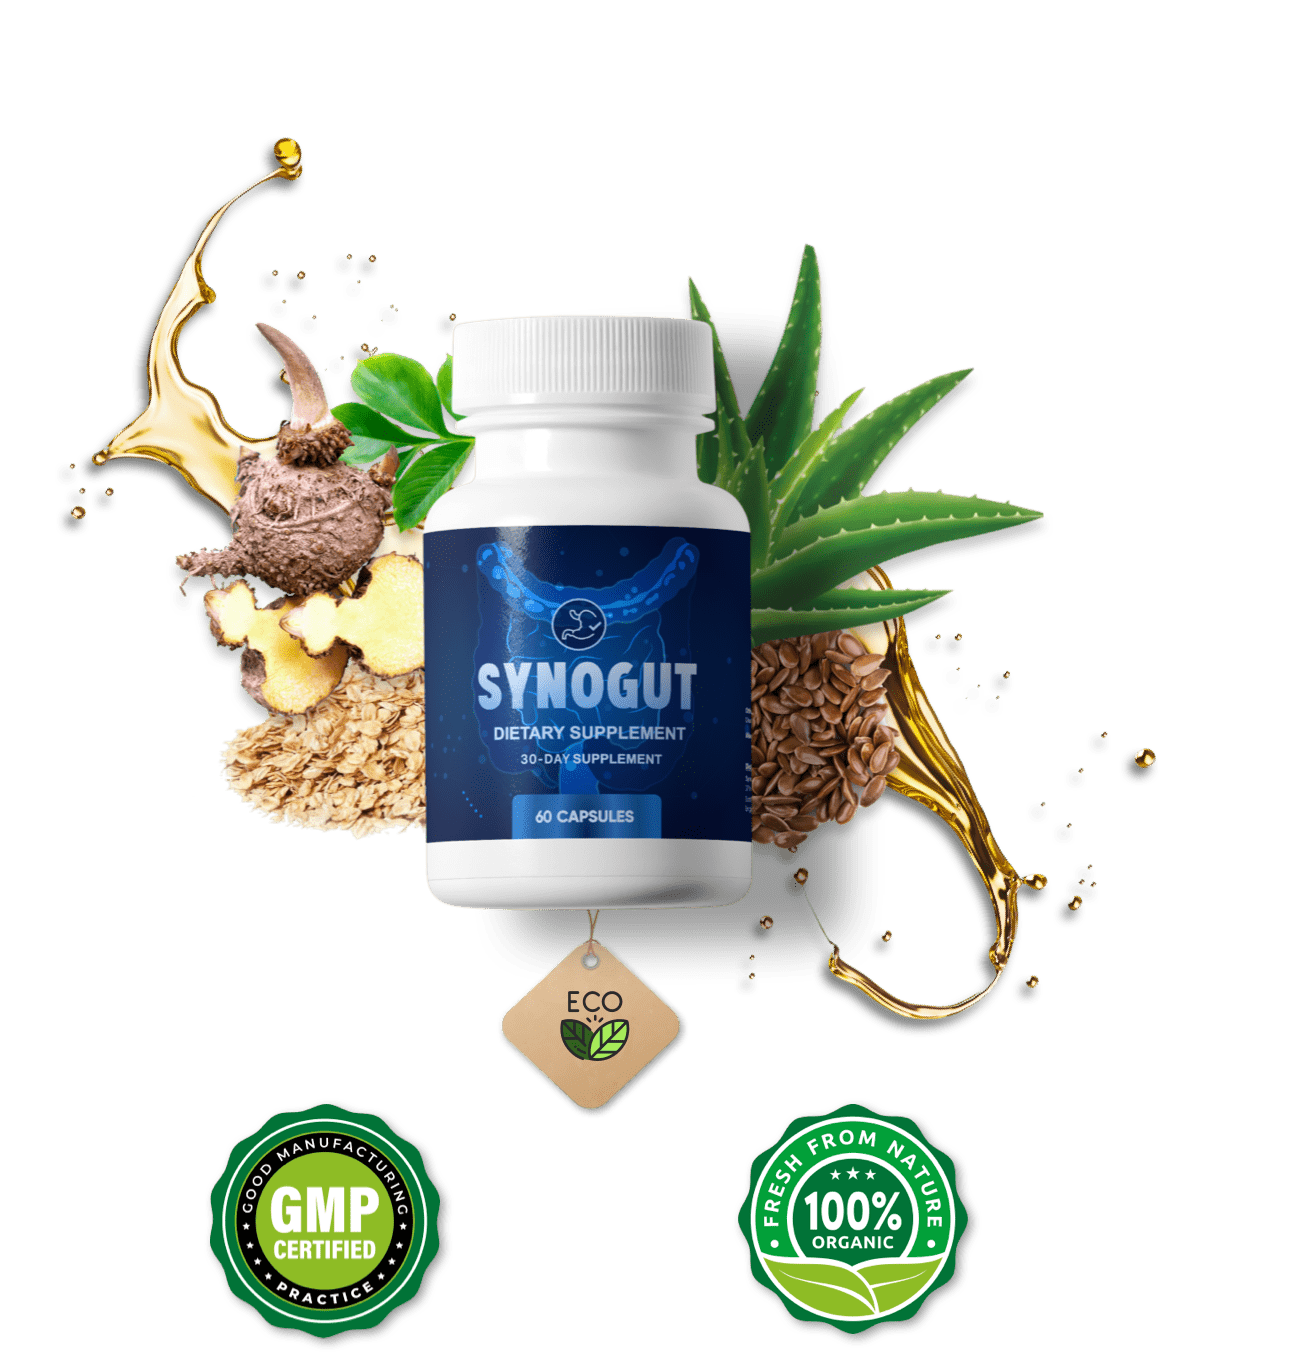 SynoGut supplement